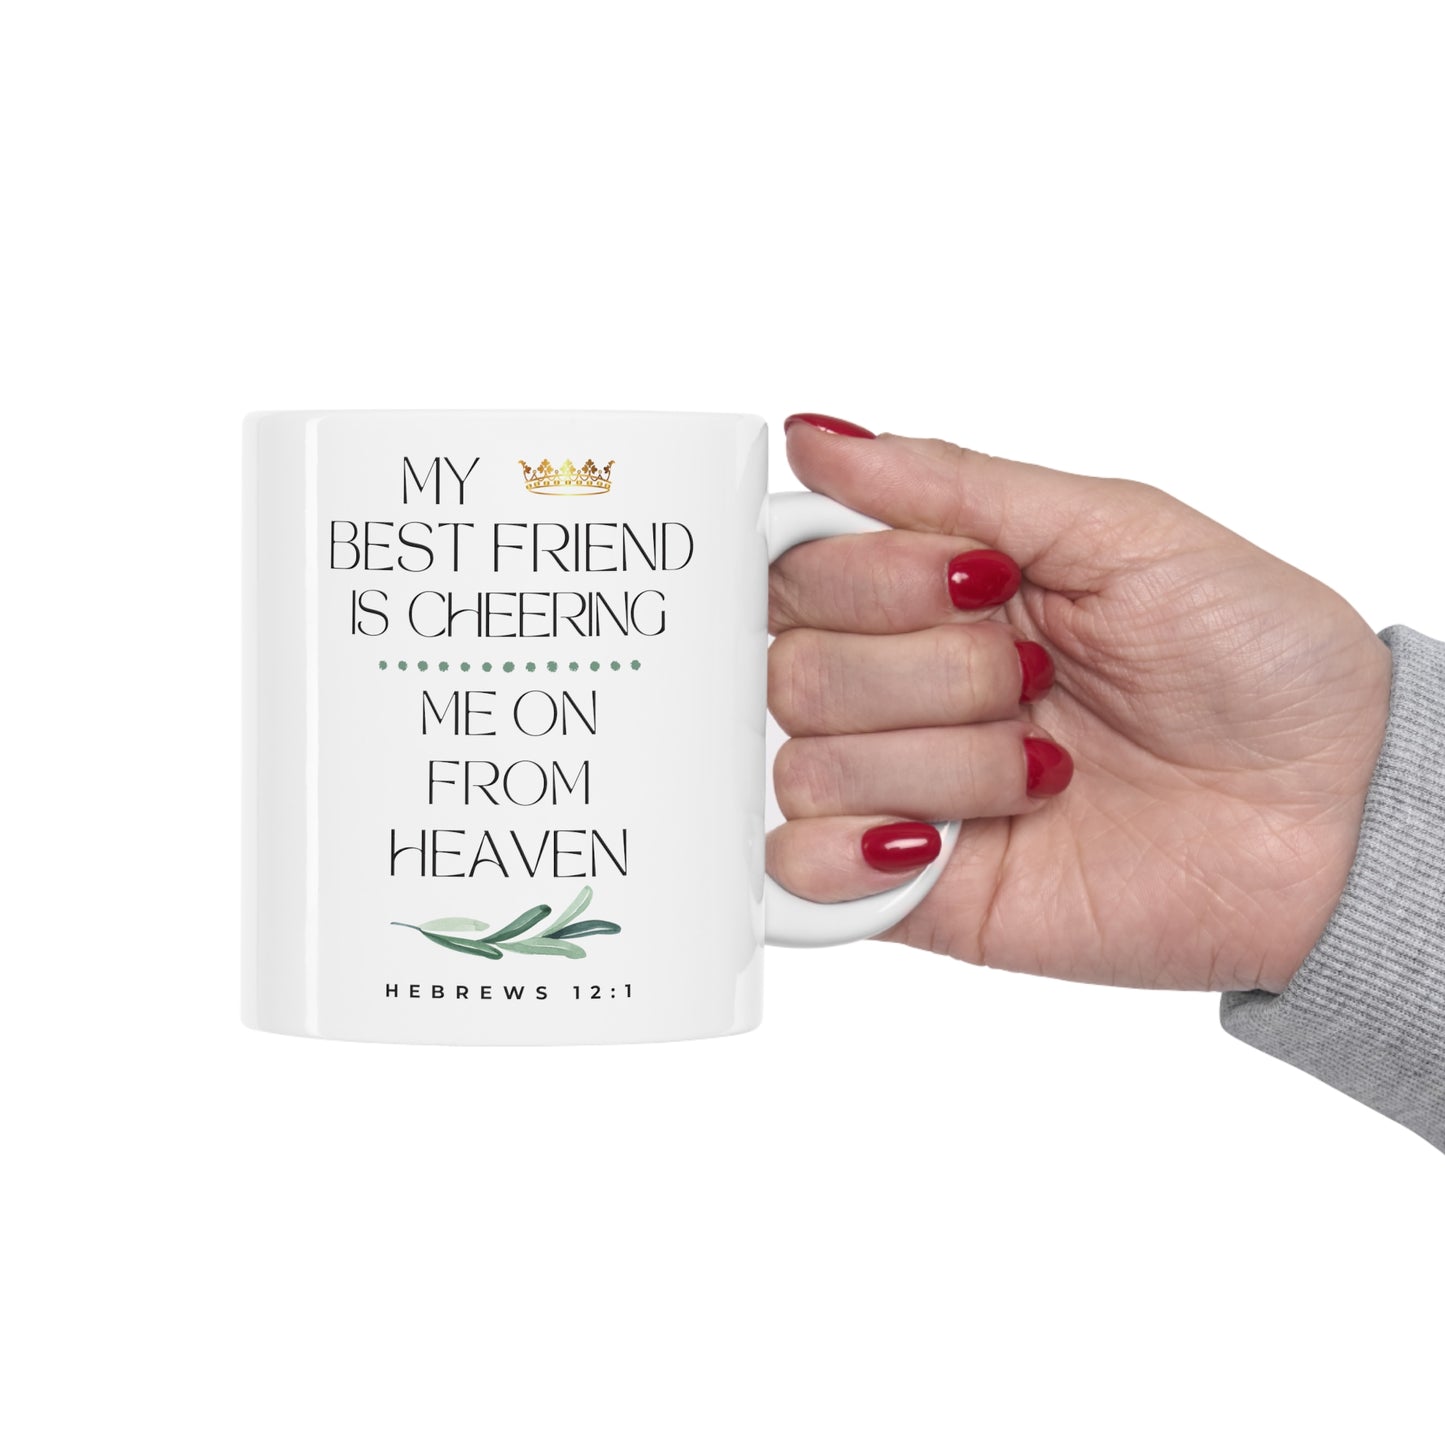 Best Friend Memorial Gift Mug, Cheering Me On From Heaven